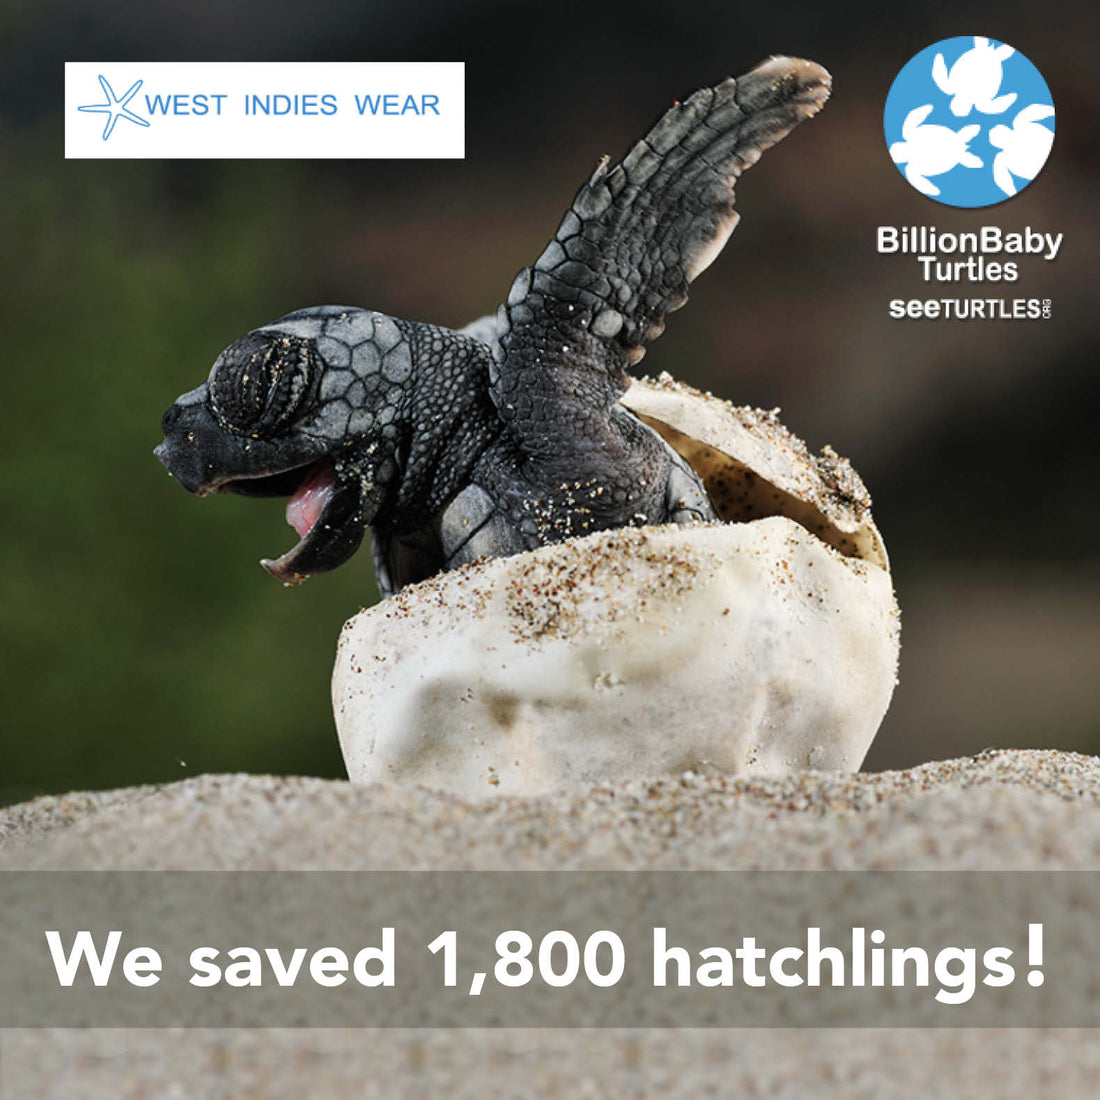 We have saved 1,800 hatchlings!